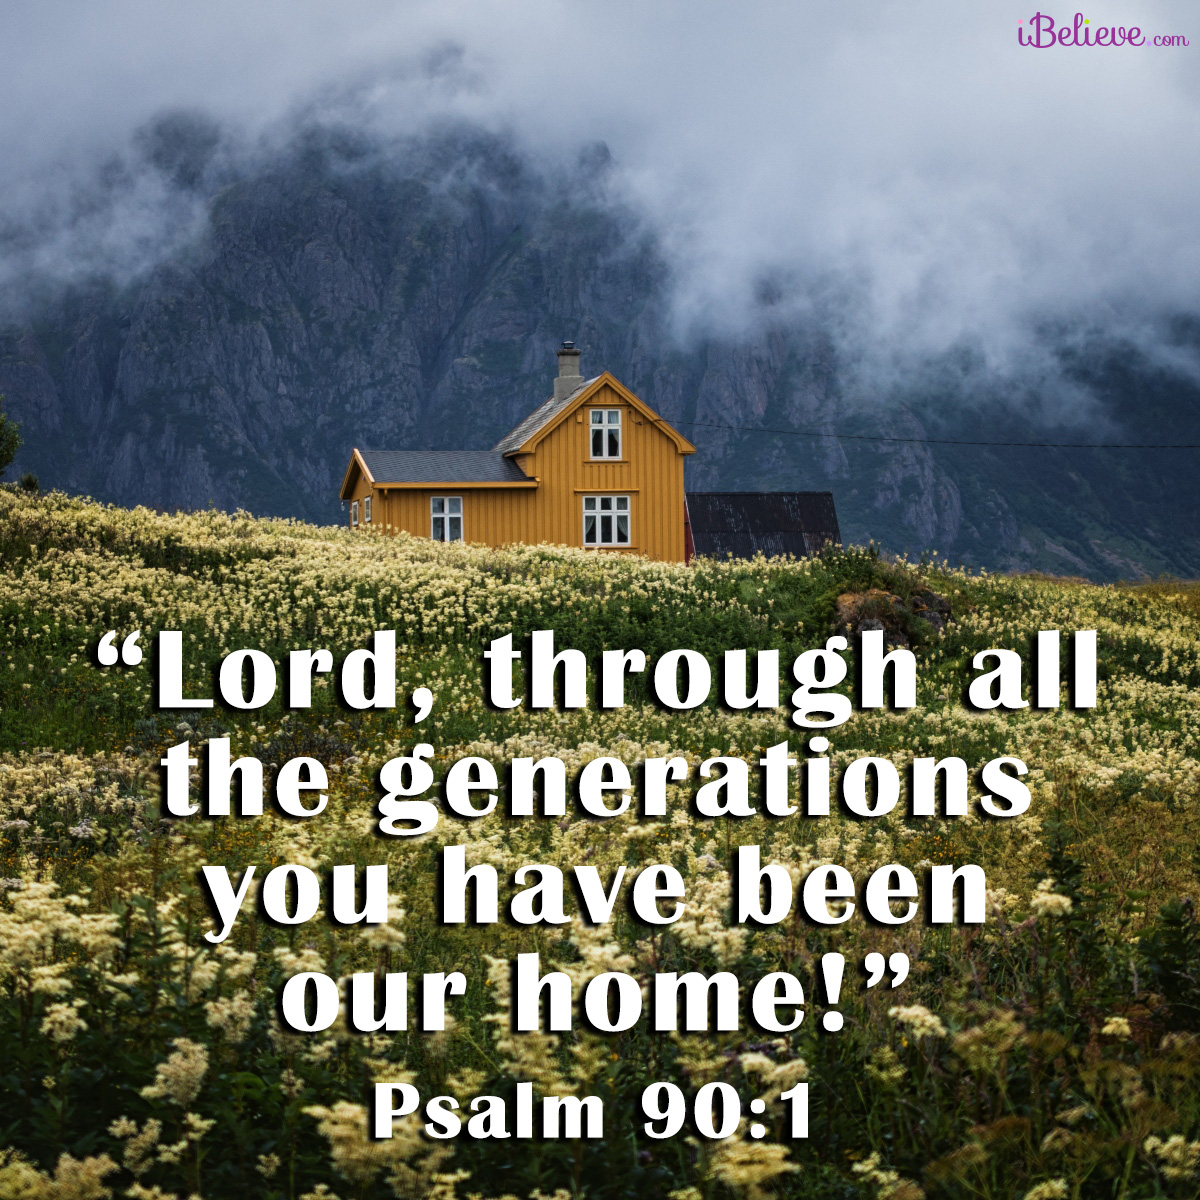 Psalm 90:1, inspirational image